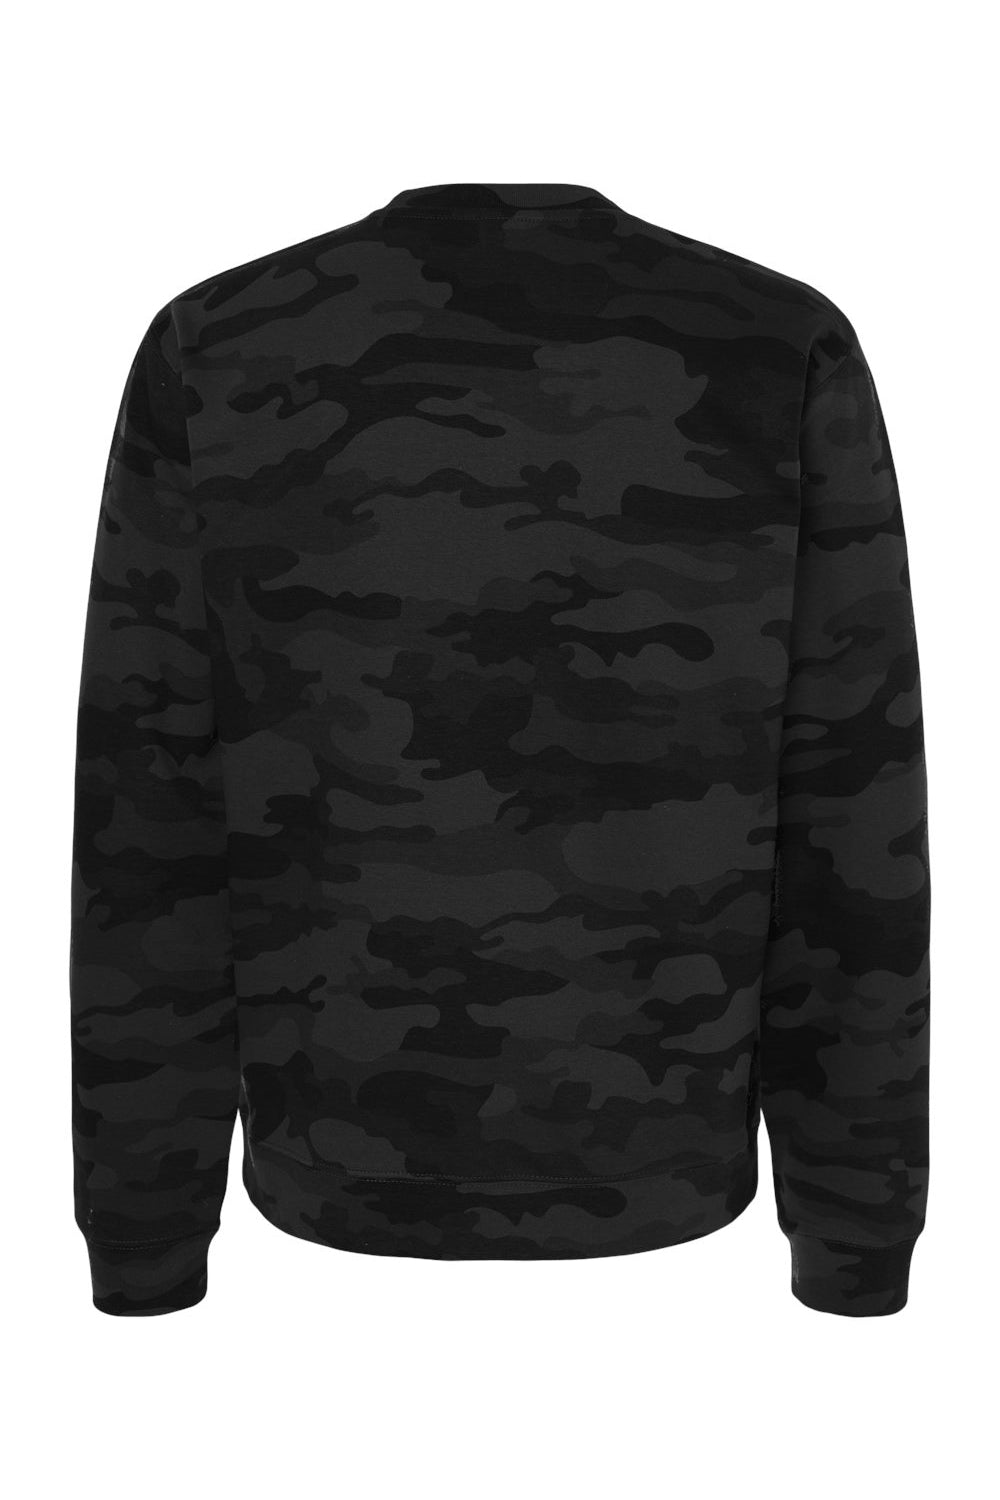 Independent Trading Co. SS3000 Mens Crewneck Sweatshirt Black Camo Flat Back